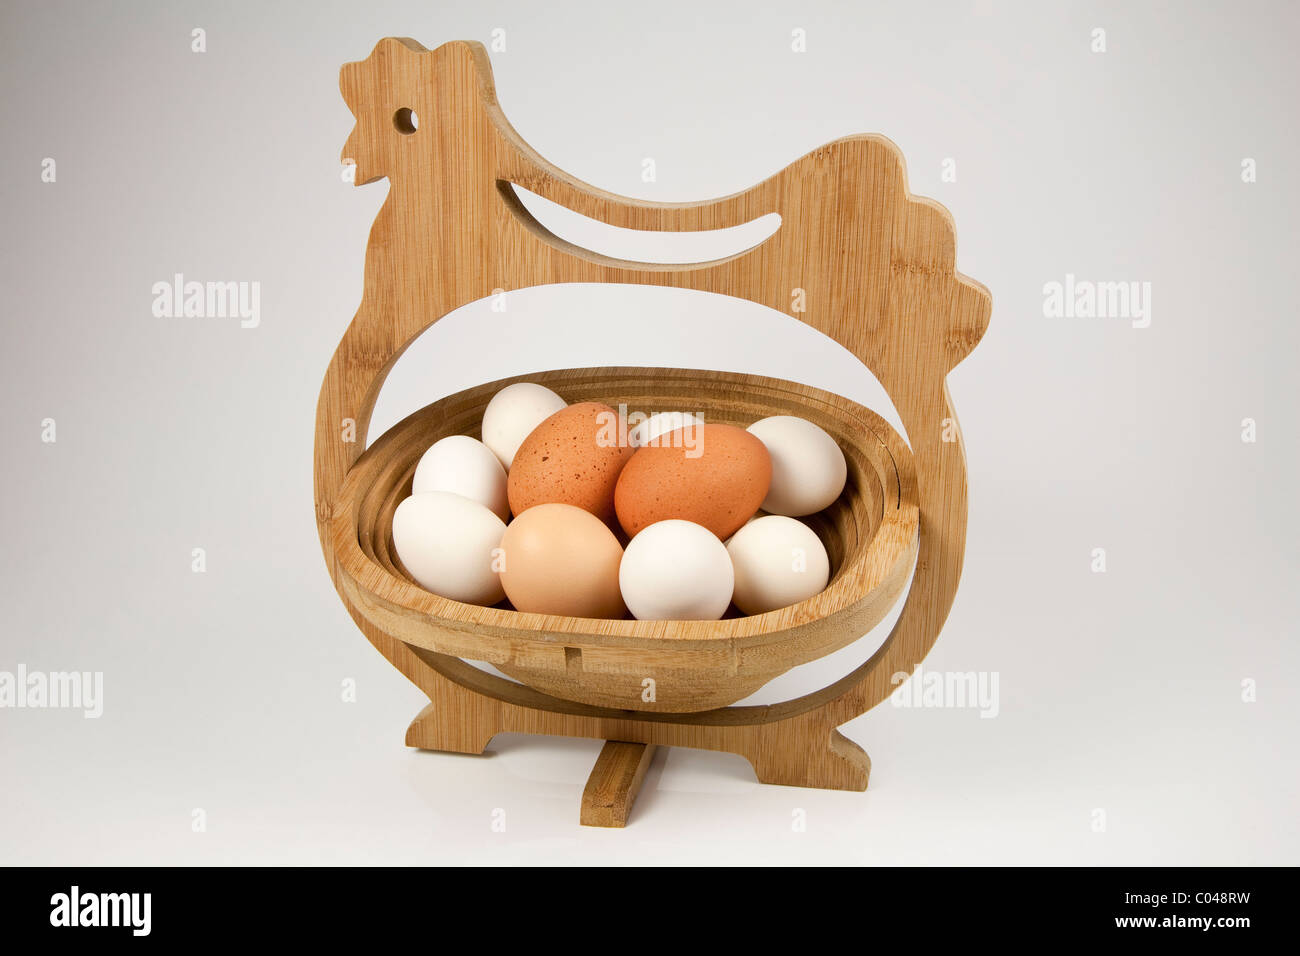 Free Range Eggs in Wooden Hen Basket Stock Photo